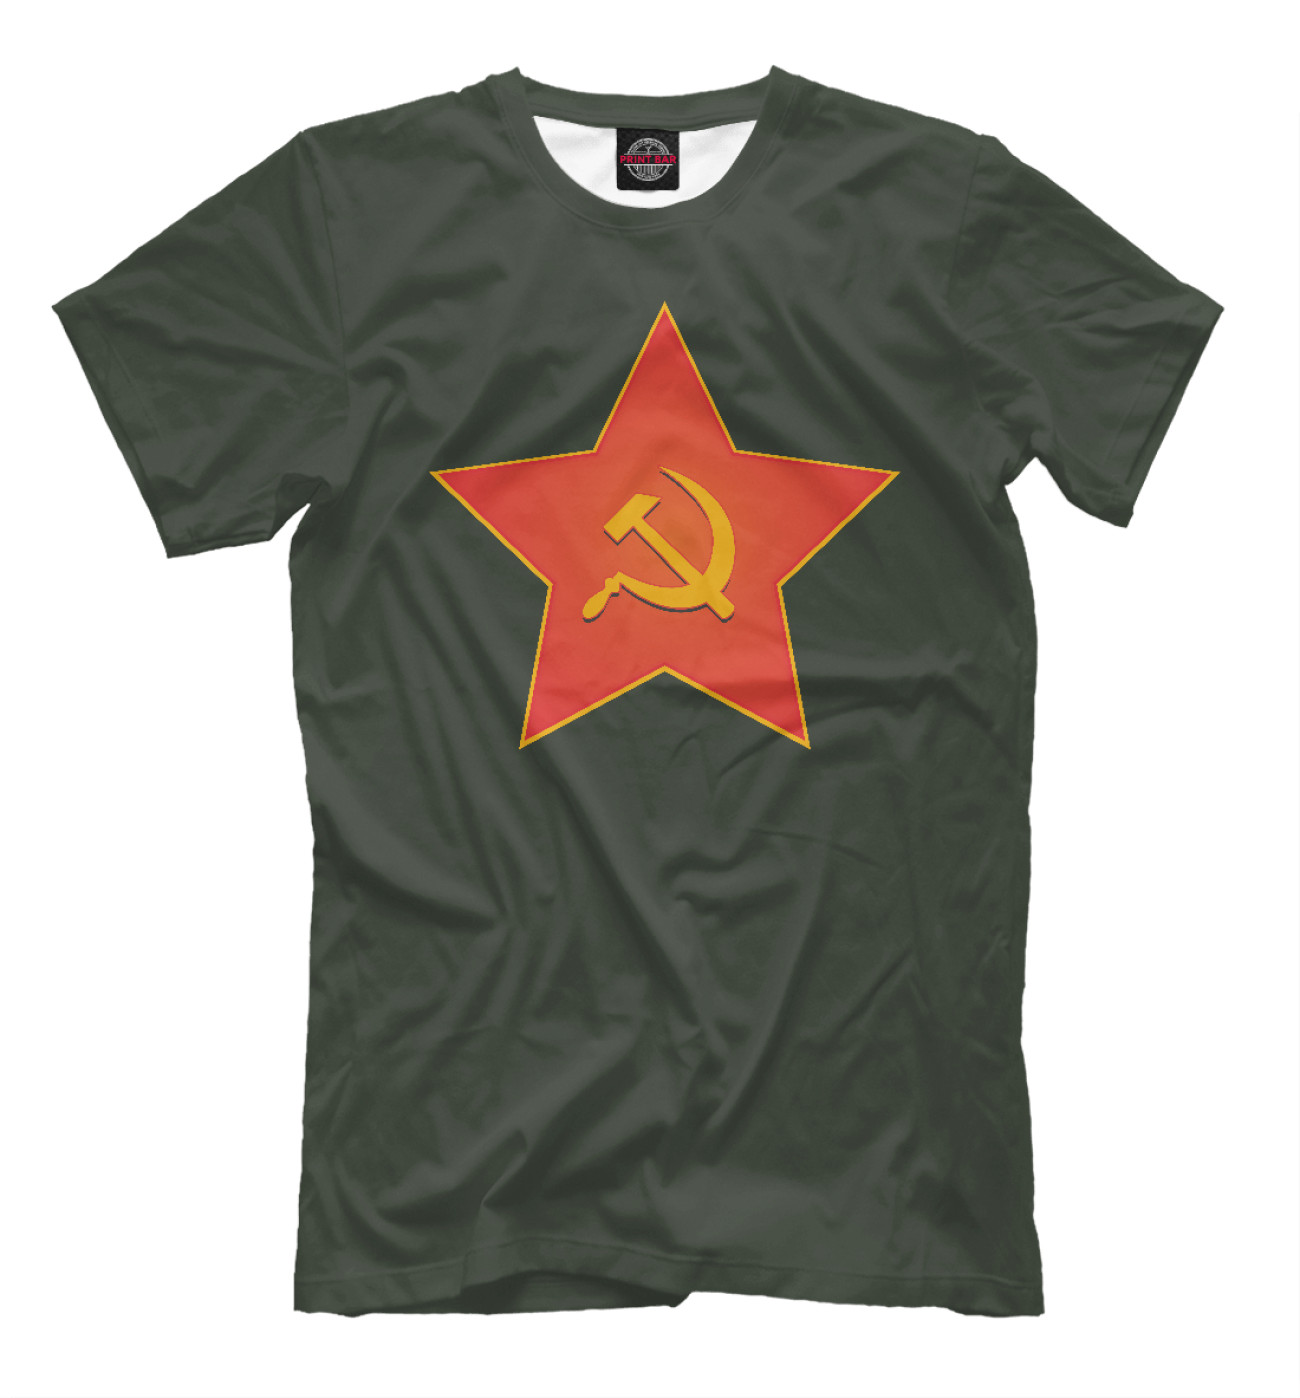 Мужская Футболка Красная звезда СССР, артикул: RZN-596430-fut-2